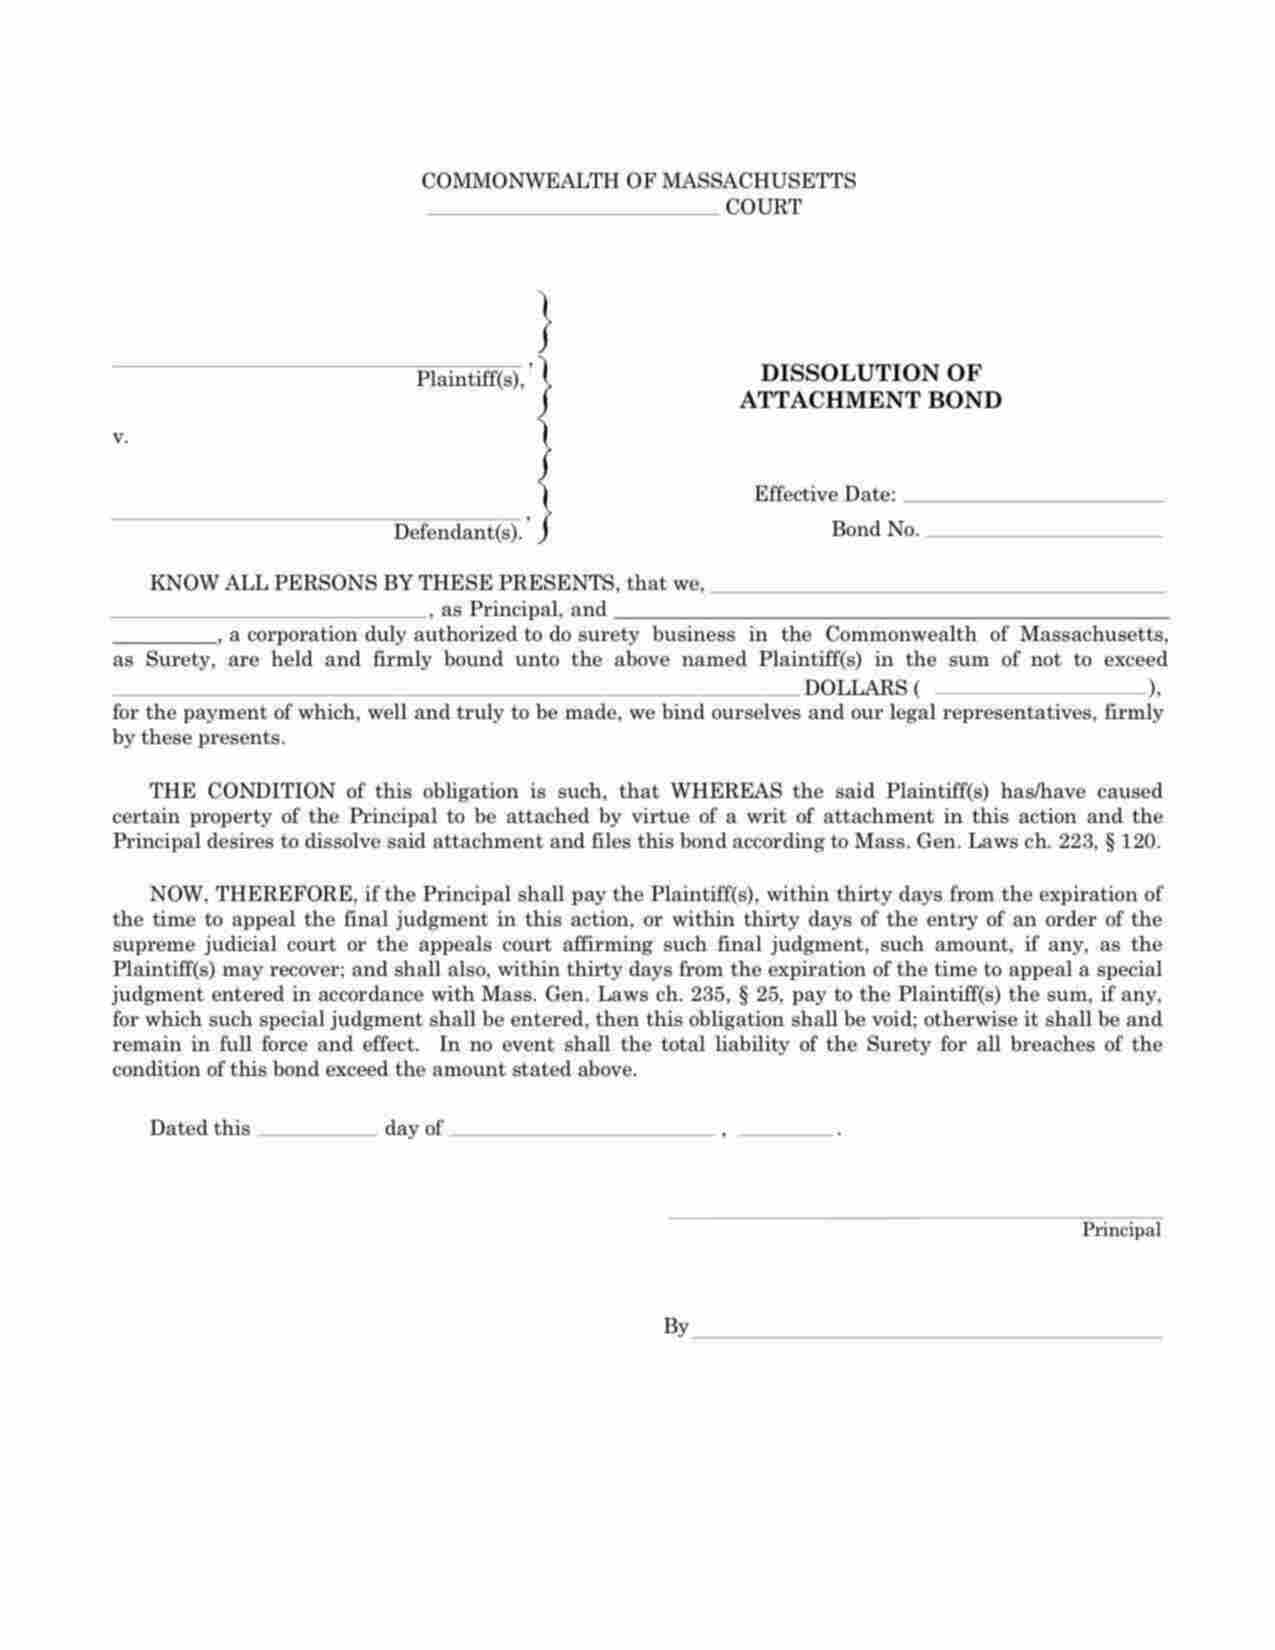 Massachusetts Dissolution of Attachment Bond Form